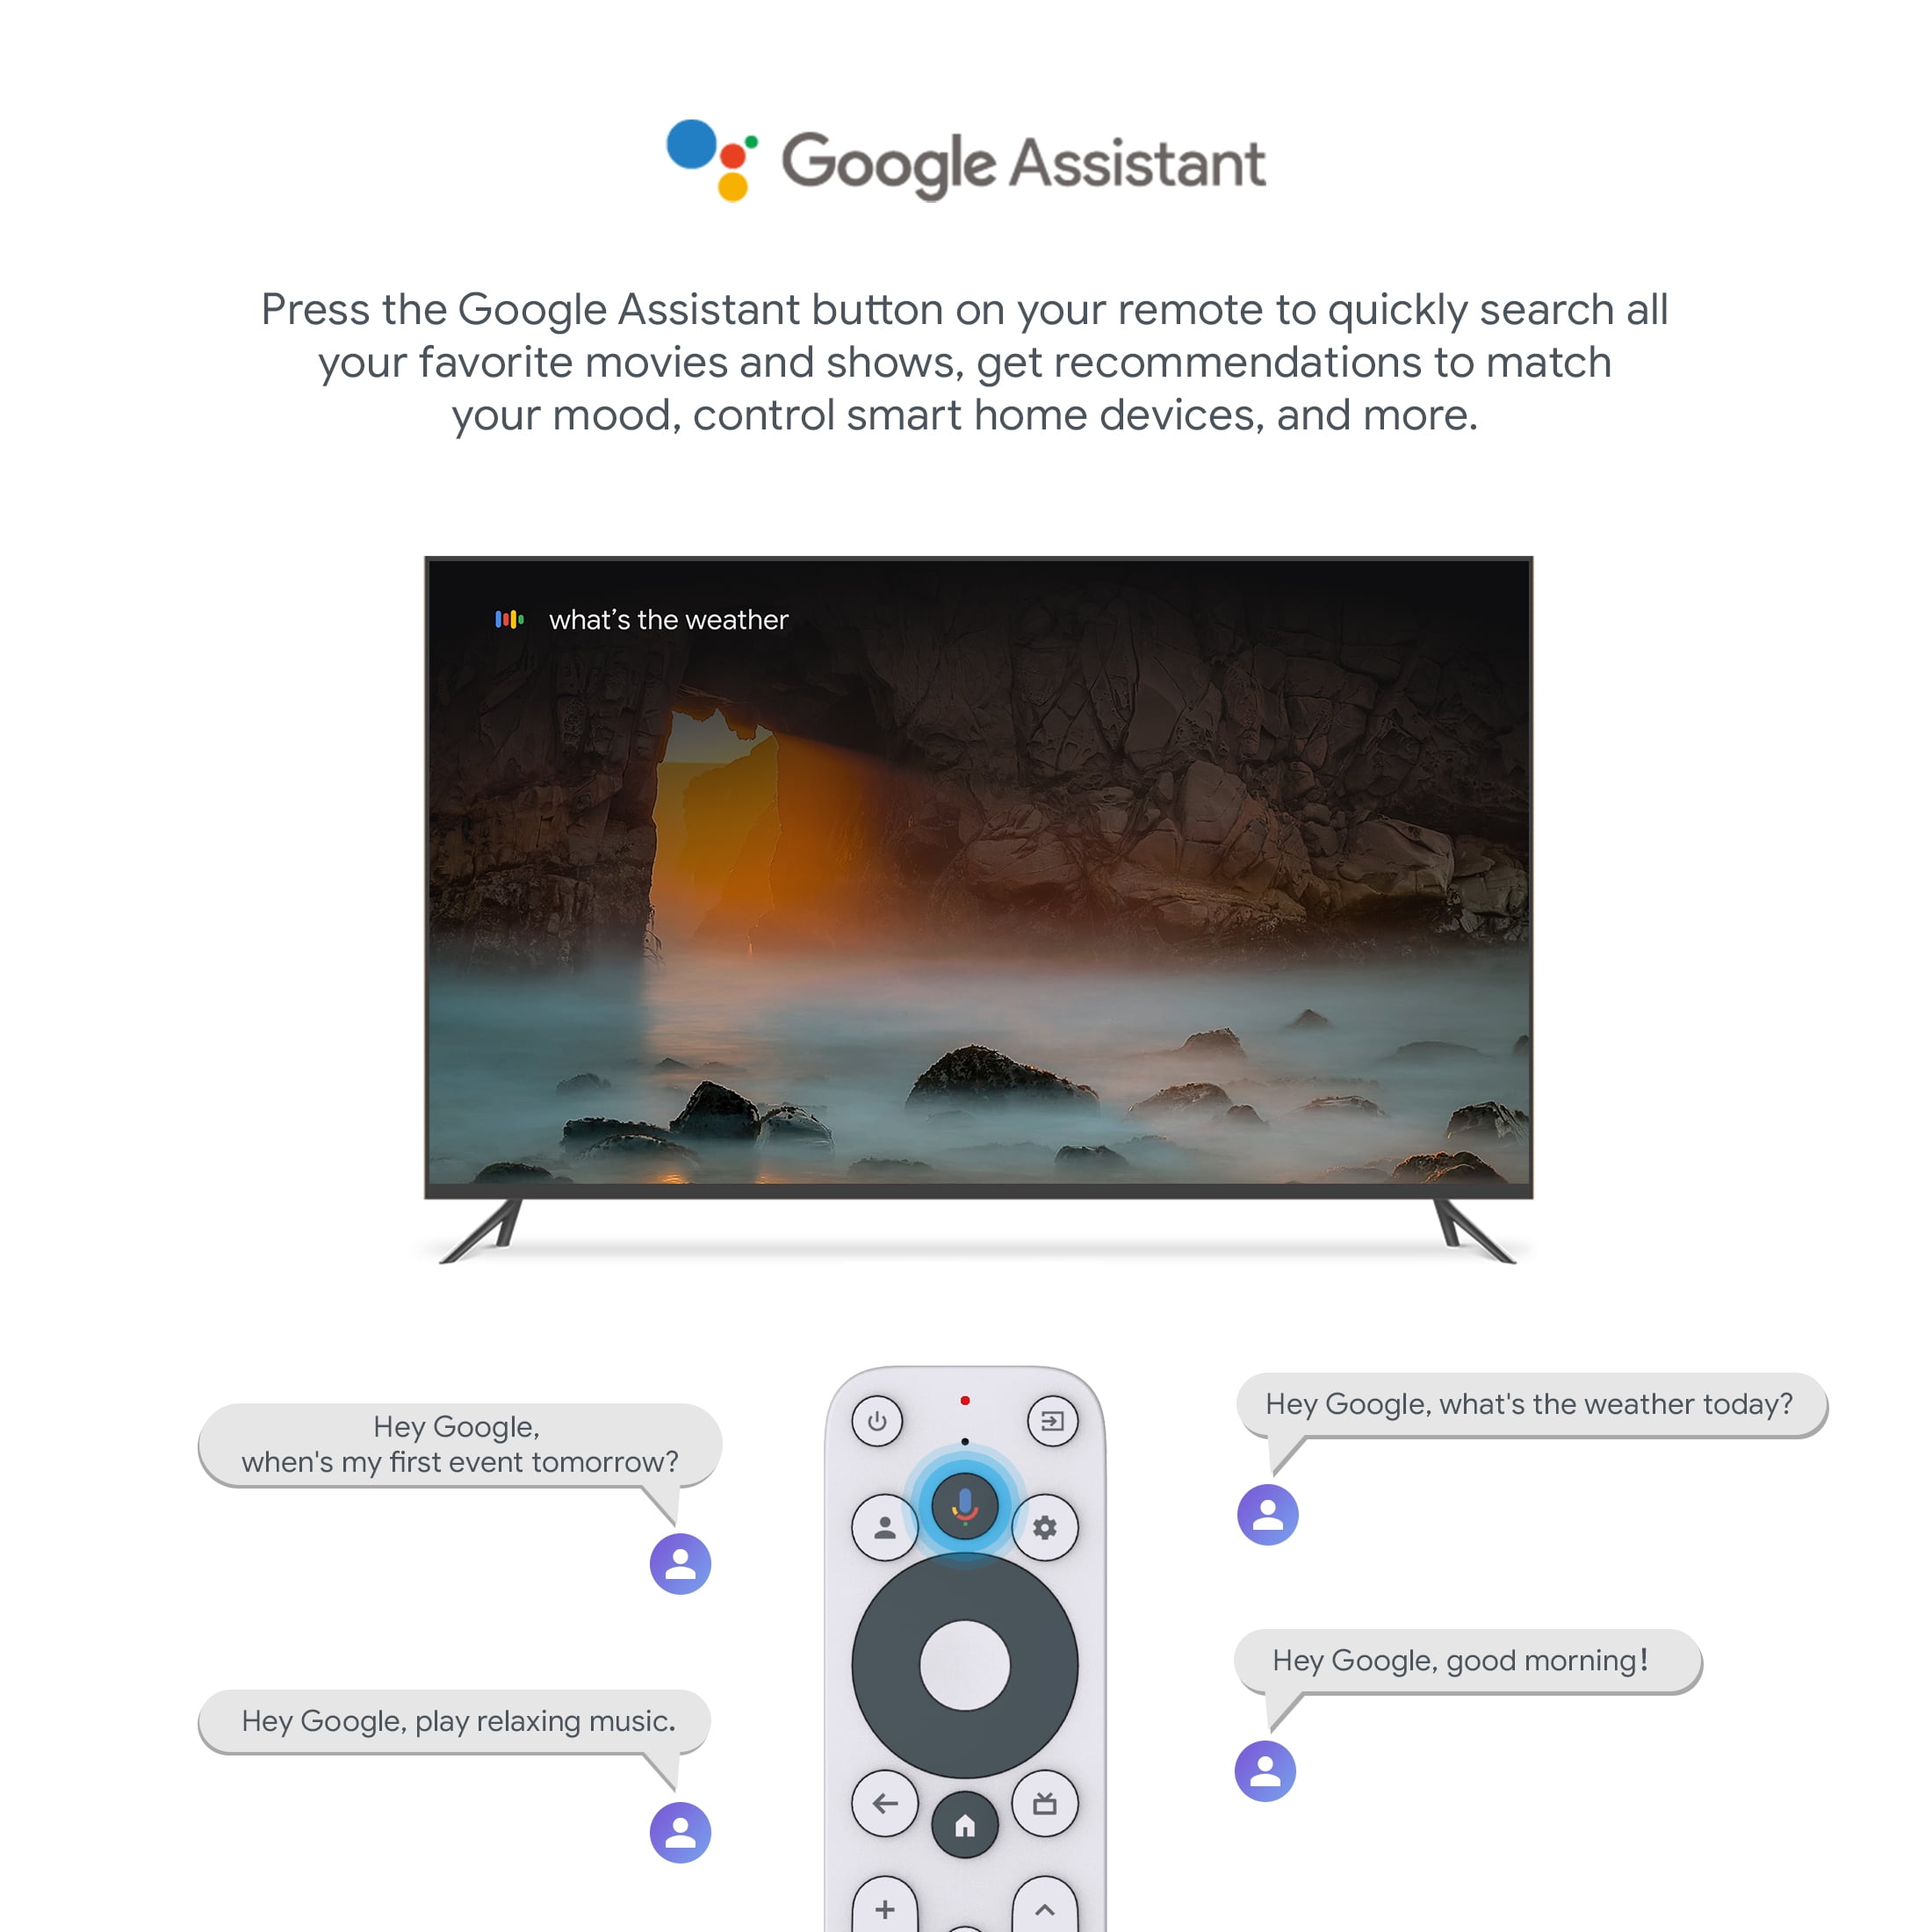  ONN Smart TV LED Class HD (720P) de 24 pulgadas compatible con  Netflix, Disney+, Apple TV,  y funciona con Google Assistant,  100012590